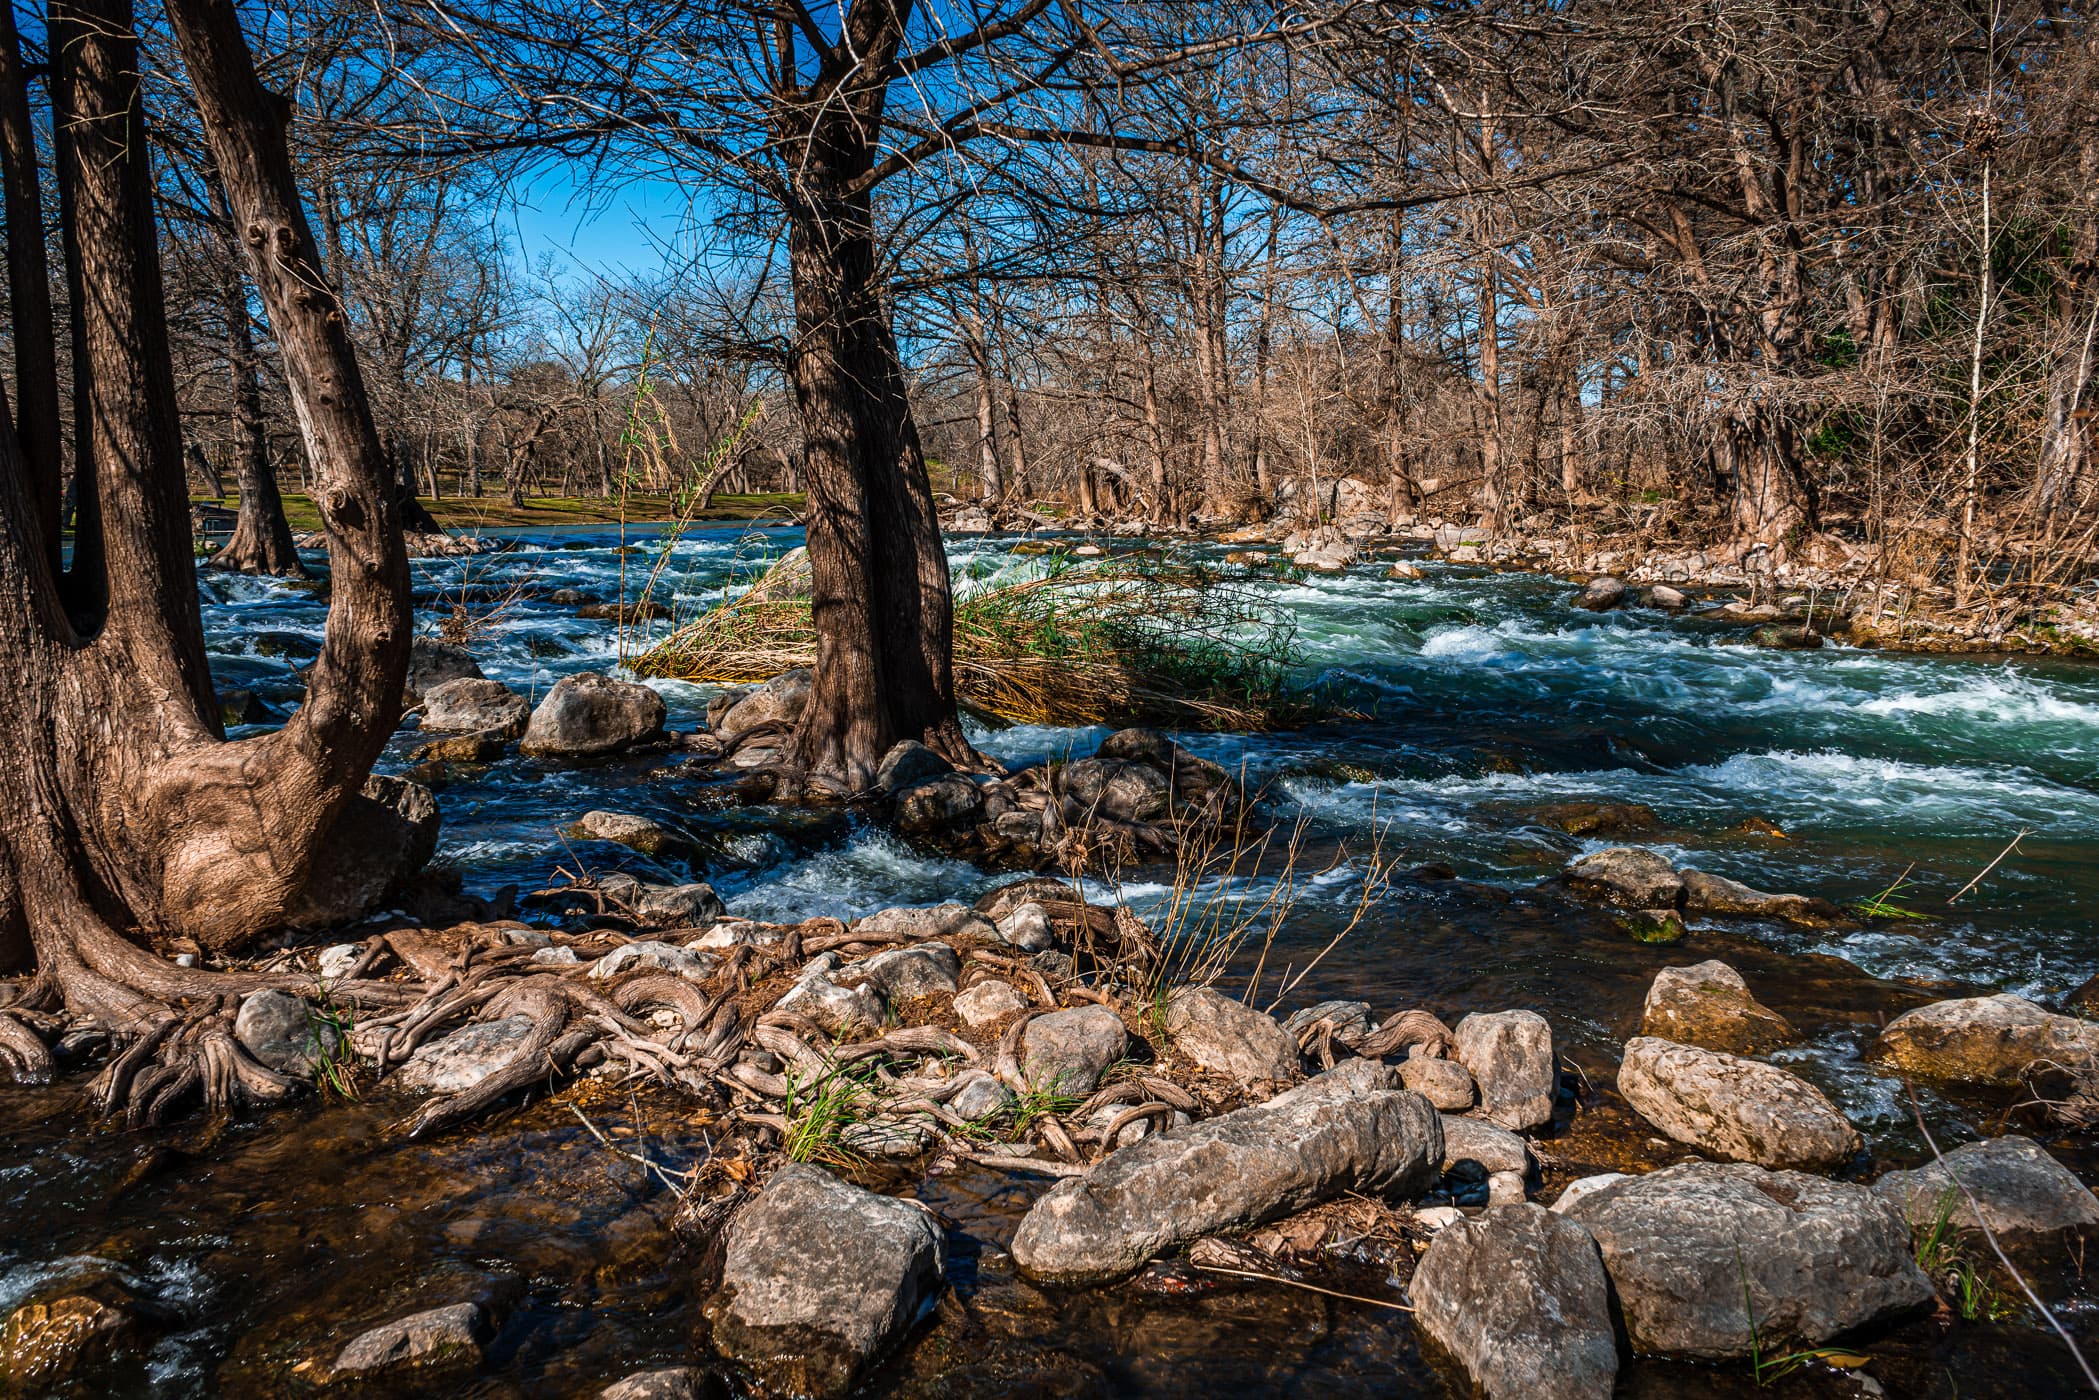 The Guadalupe River flows over rocks near Gruene, Texas.